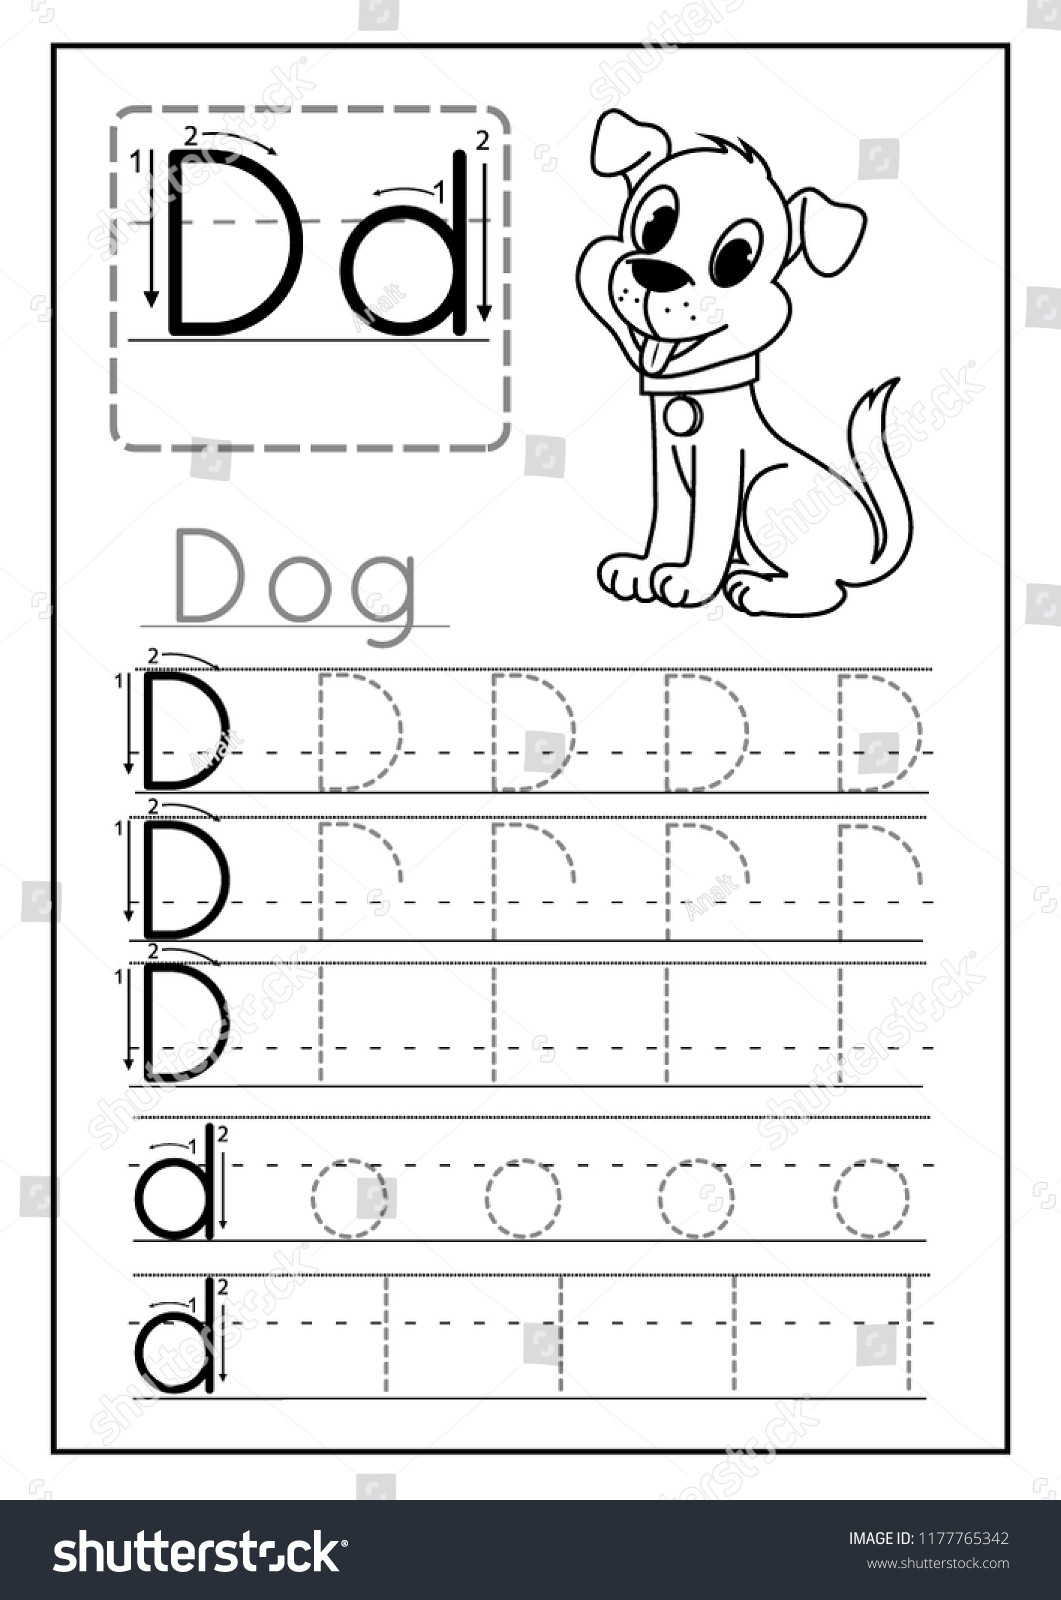 Letter D Worksheet for Preschool Writing Practice Letter D Printable Worksheet à¹à¸§à¸à¹à¸à¸­à¸£à¹à¸ªà¸à¹à¸­à¸